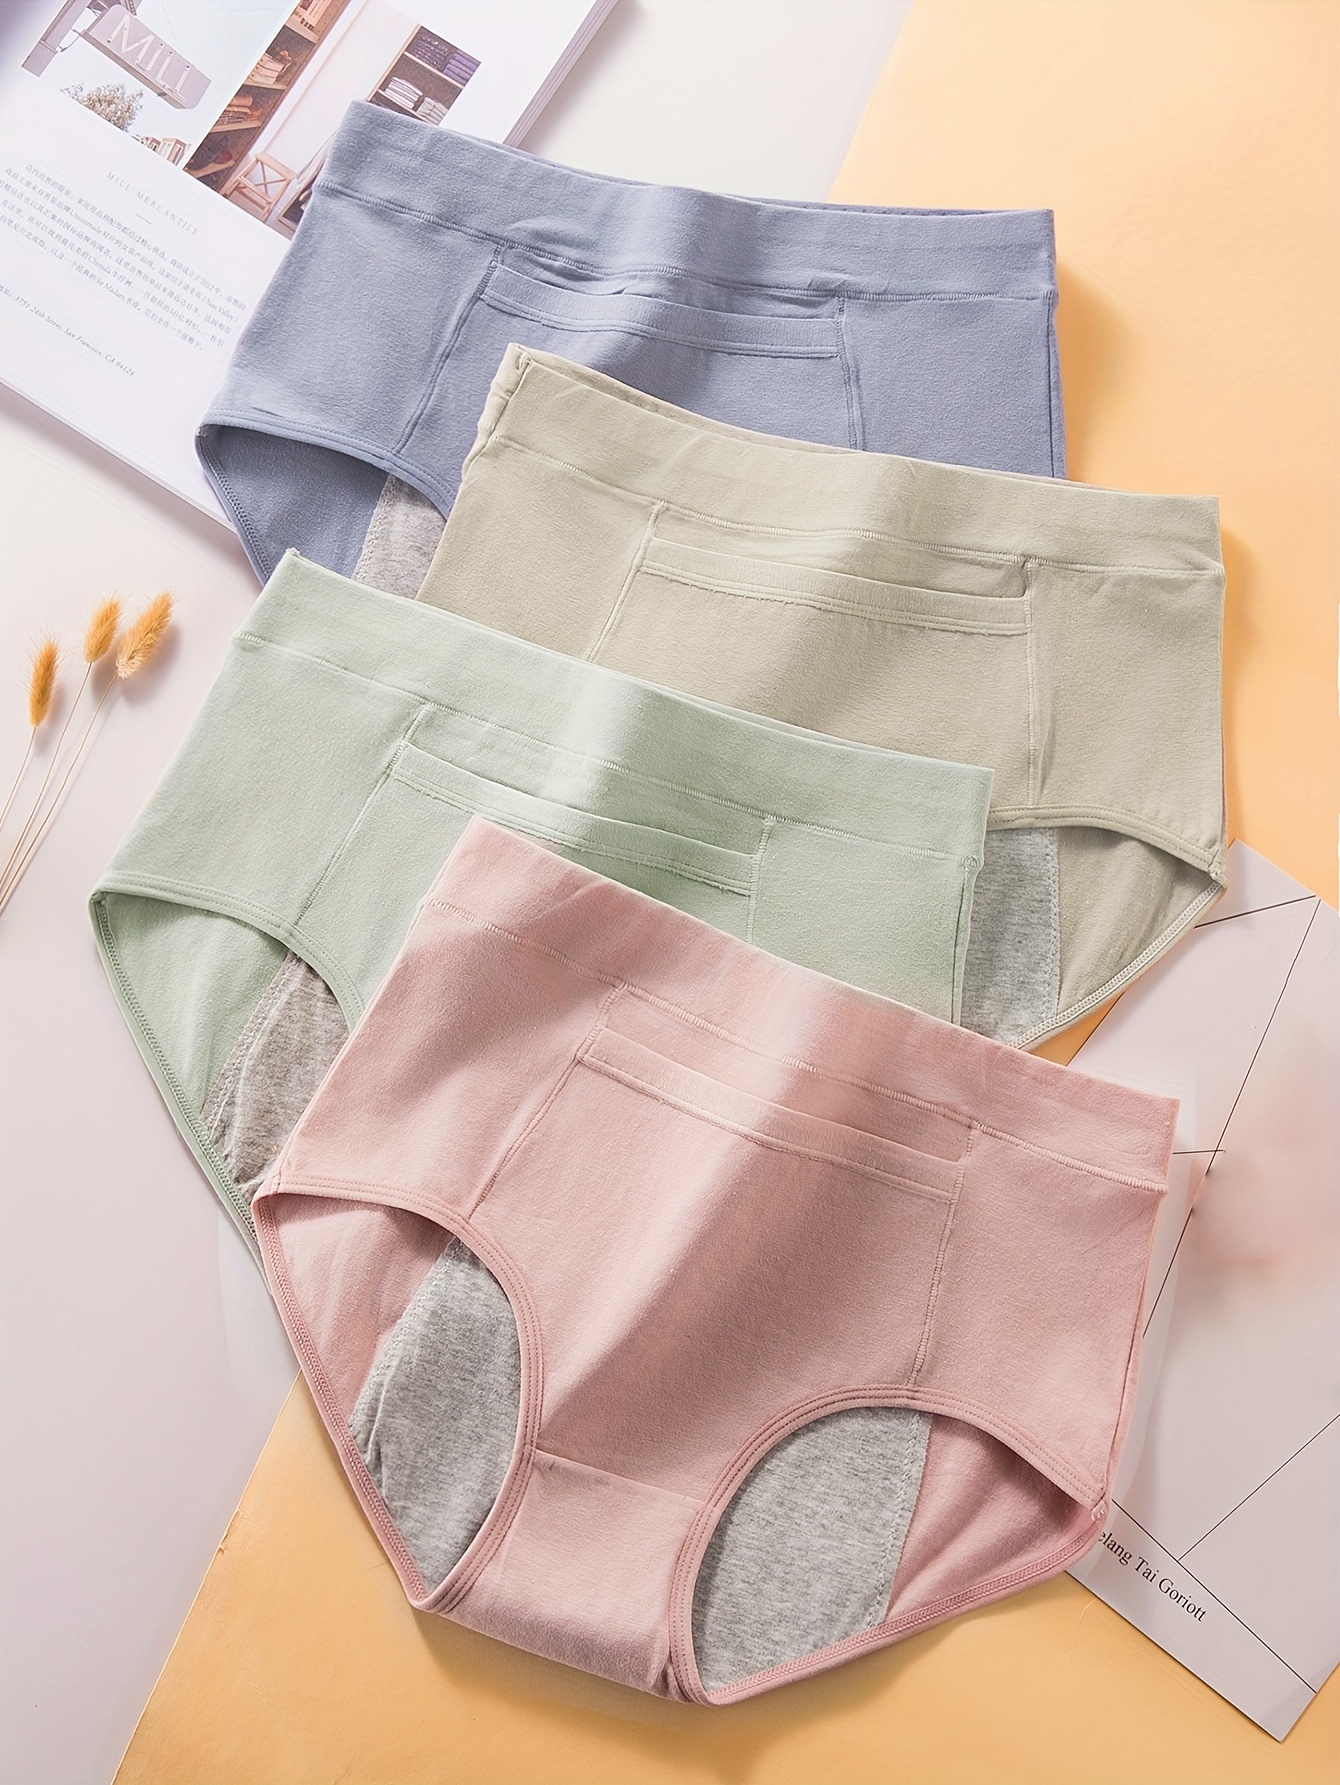 Plus Size Period Underwear Women's Plus Eyelet Breathable - Temu